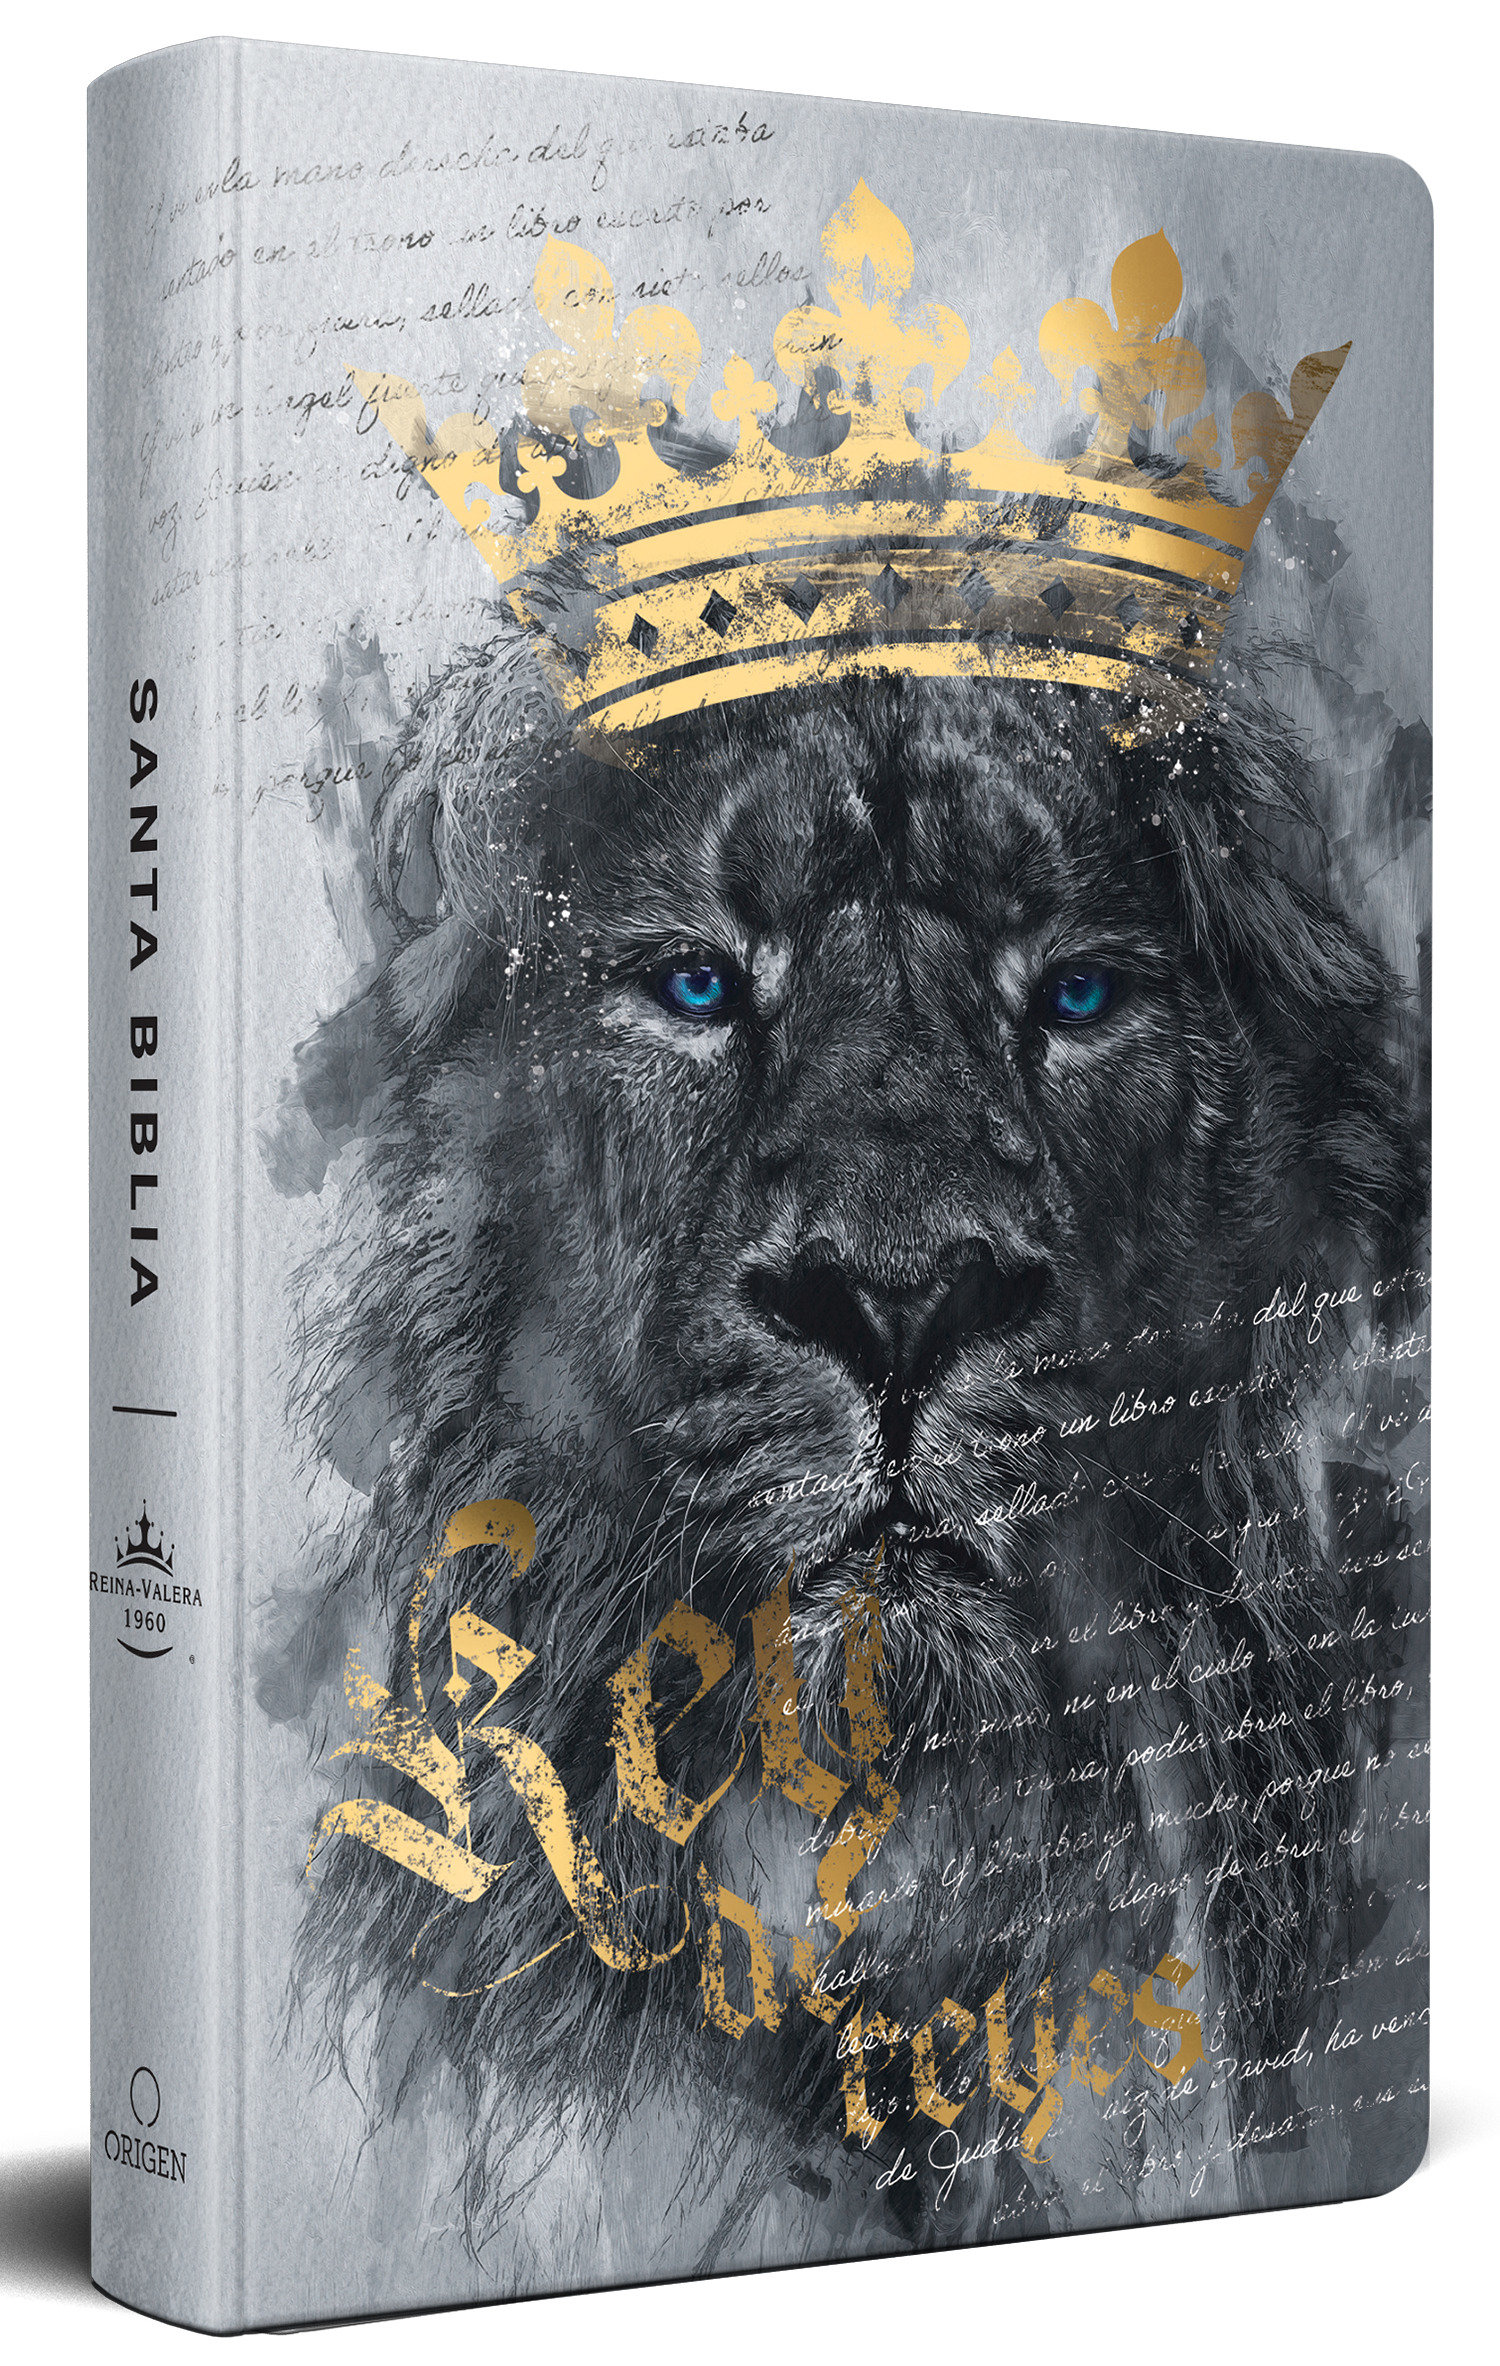 Biblia Rvr60 Letra Grande Tamaño Manual, Tapa Dura León Rey De Reyes / Spanish B Ible Rvr60 Handy Size Large Print Hardcover Lion King Of Kings (Hardcover Book)